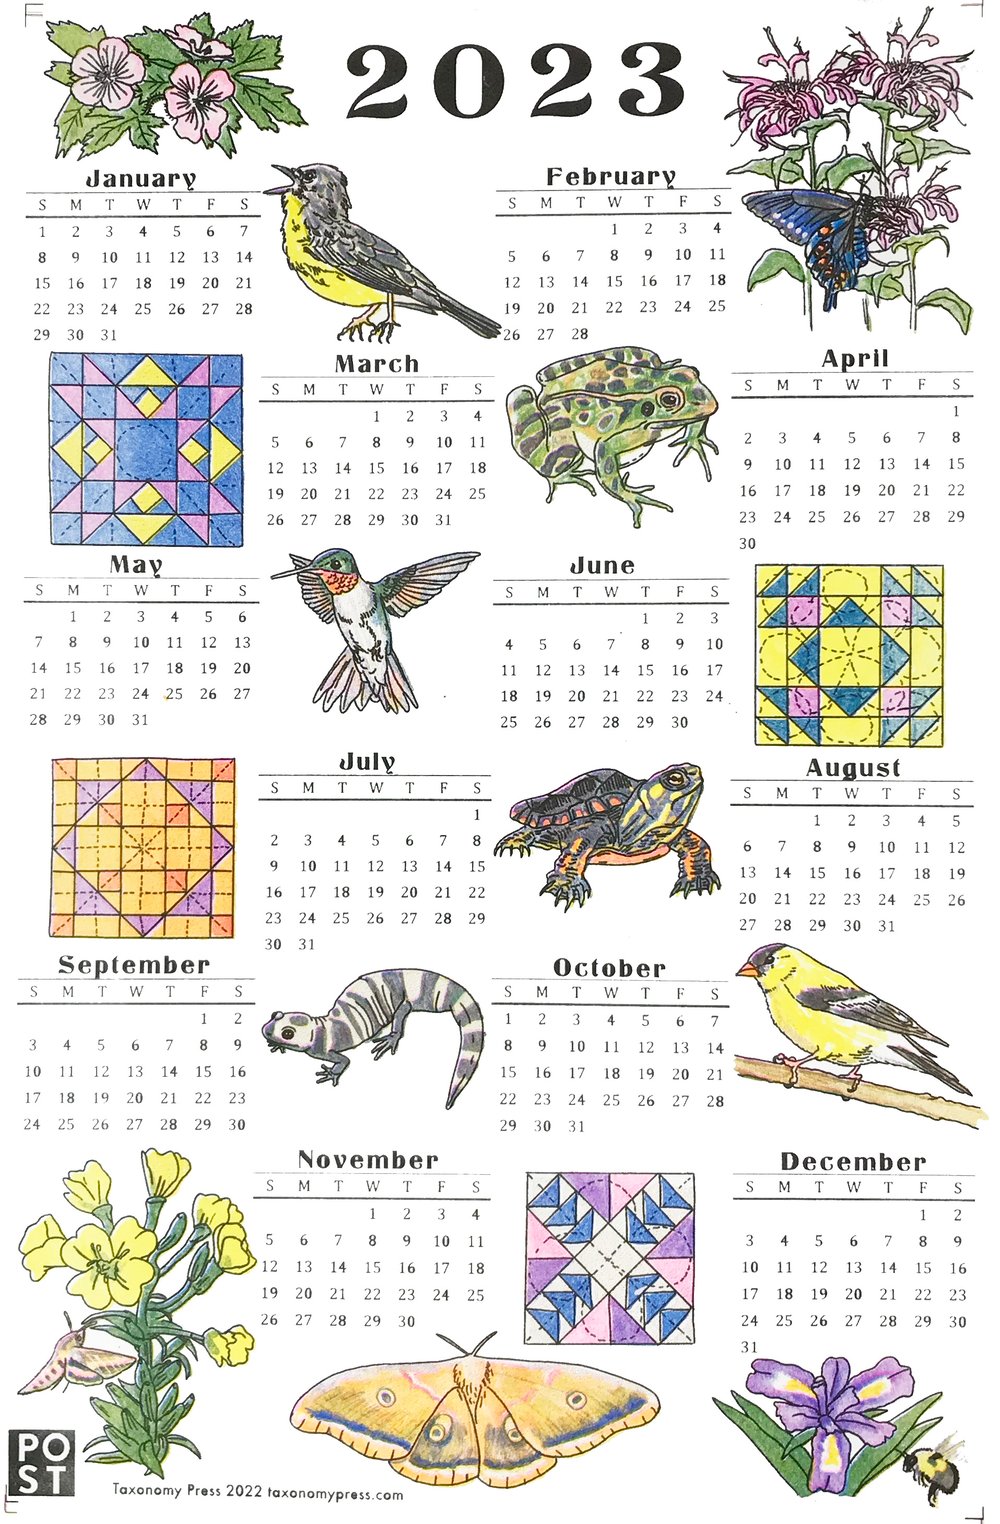 2023 Taxonomy Press Calendar: Comfort and Joy